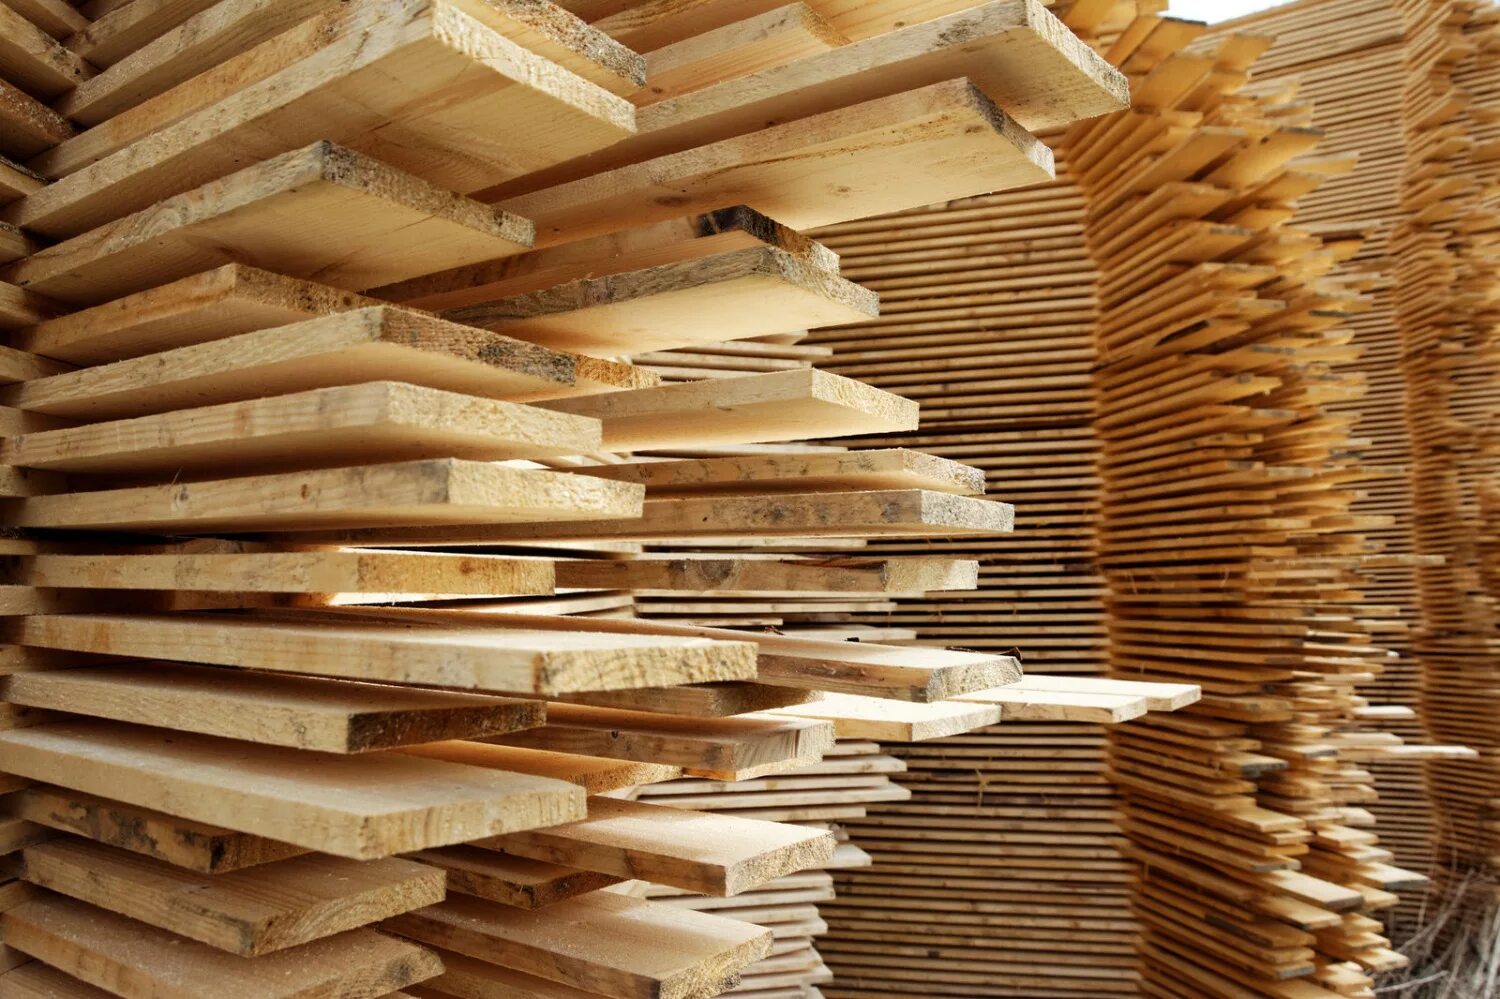 More wooden most wooden. Дерево строительный материал. Стройматериалы из дерева. Древесина и пиломатериалы. Строительные материалы из древесины.